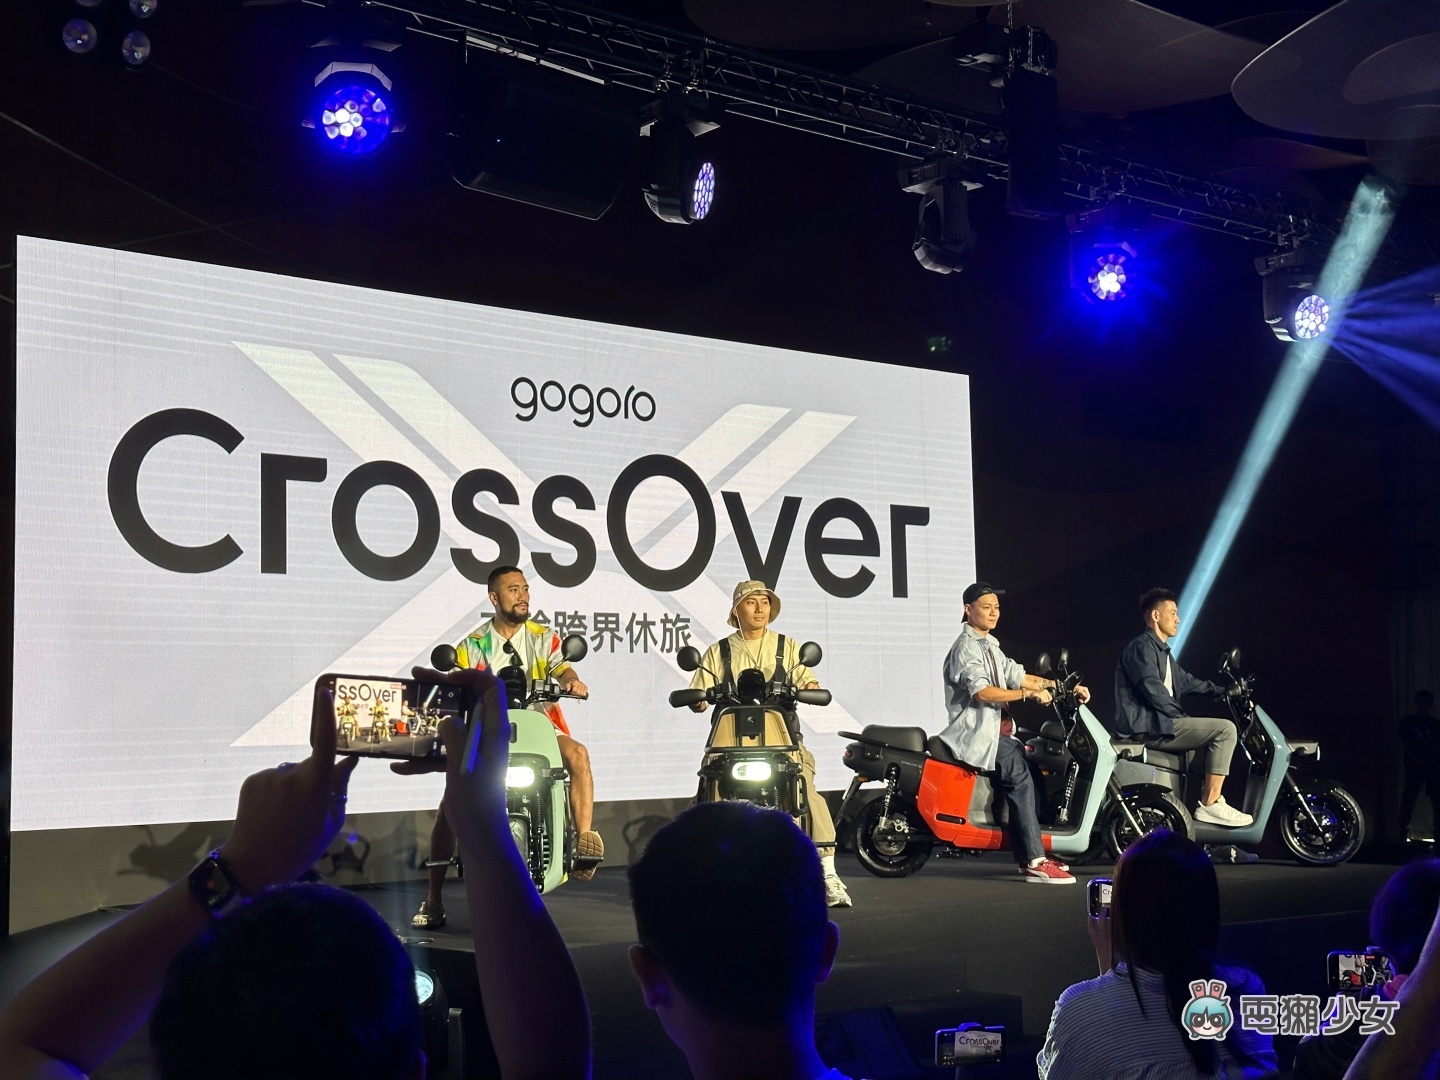 Gogoro 全新機種 CrossOver 亮相：超寬腳踏空間＋可翻座椅，還能客製化車色！